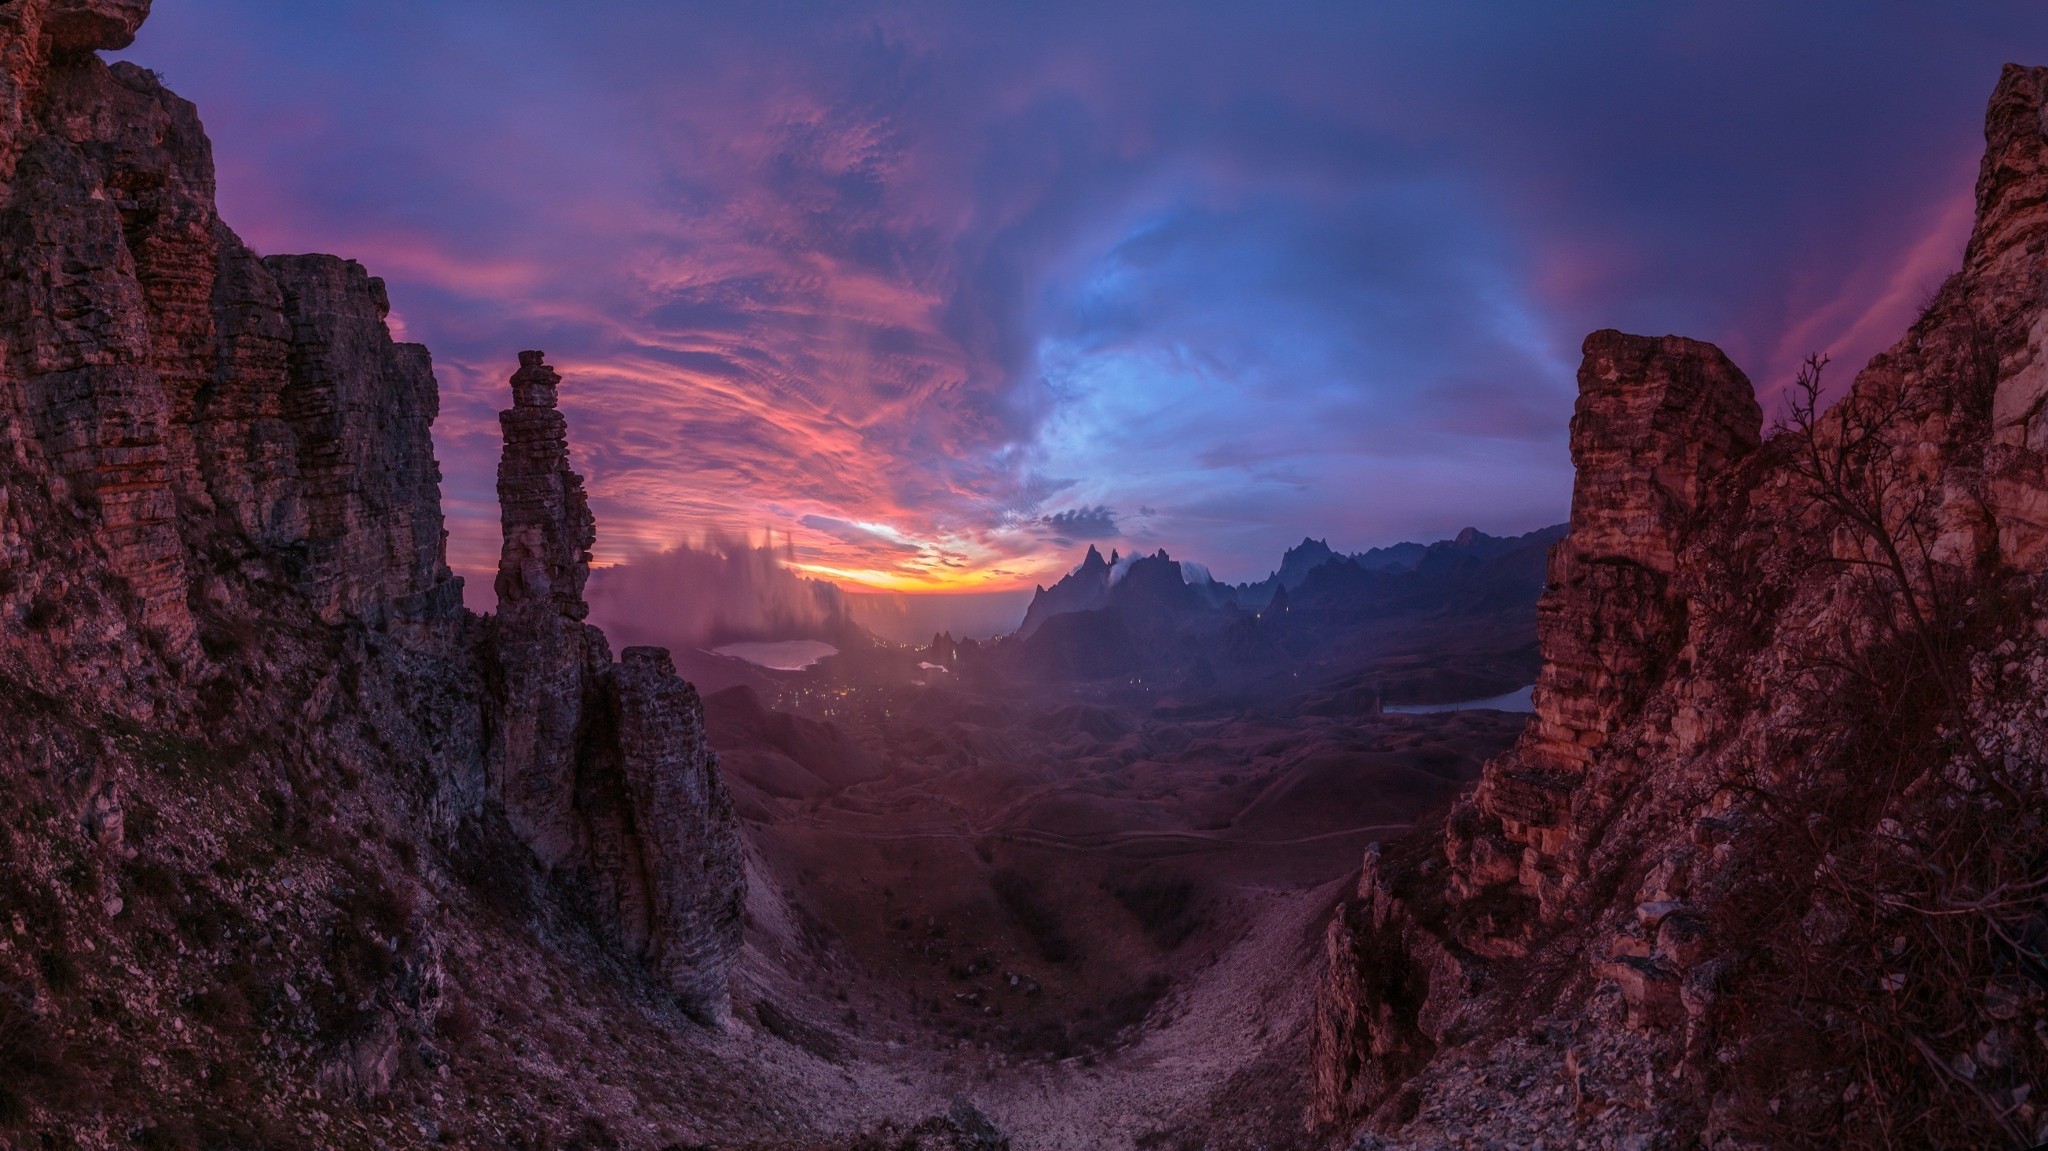 General 2048x1151 landscape nature cliff sunset valley sky desert clouds rocks rock formation